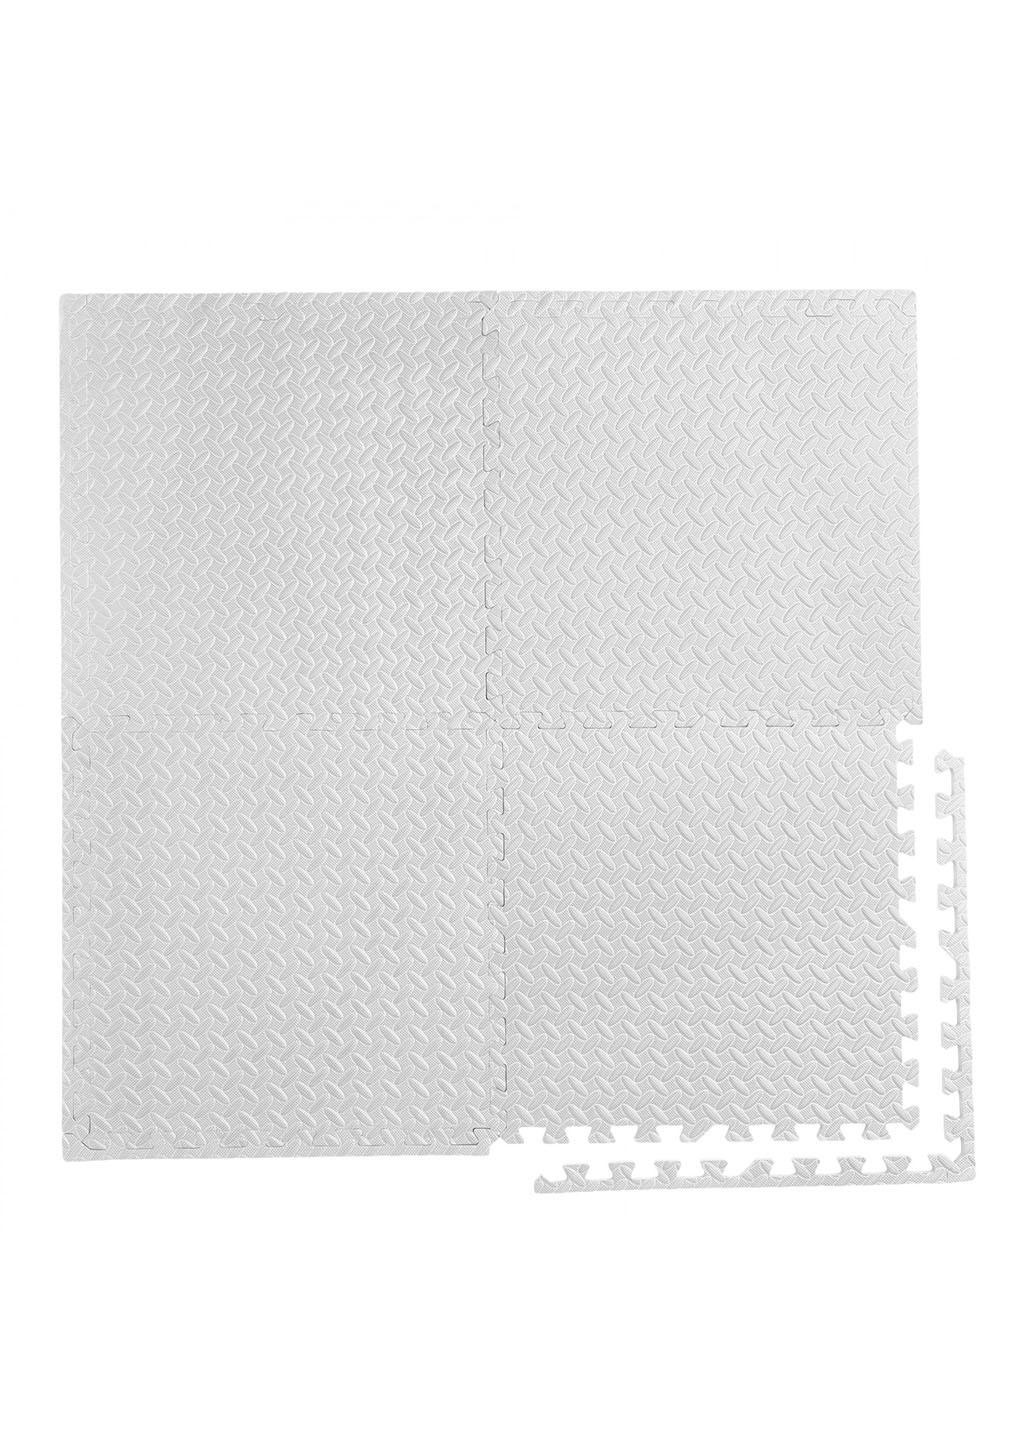 Мат-пазл (ласточкин хвост) Cornix Mat Puzzle EVA 120 x 120 x 1 cм XR-0233 White No Brand (264642934)